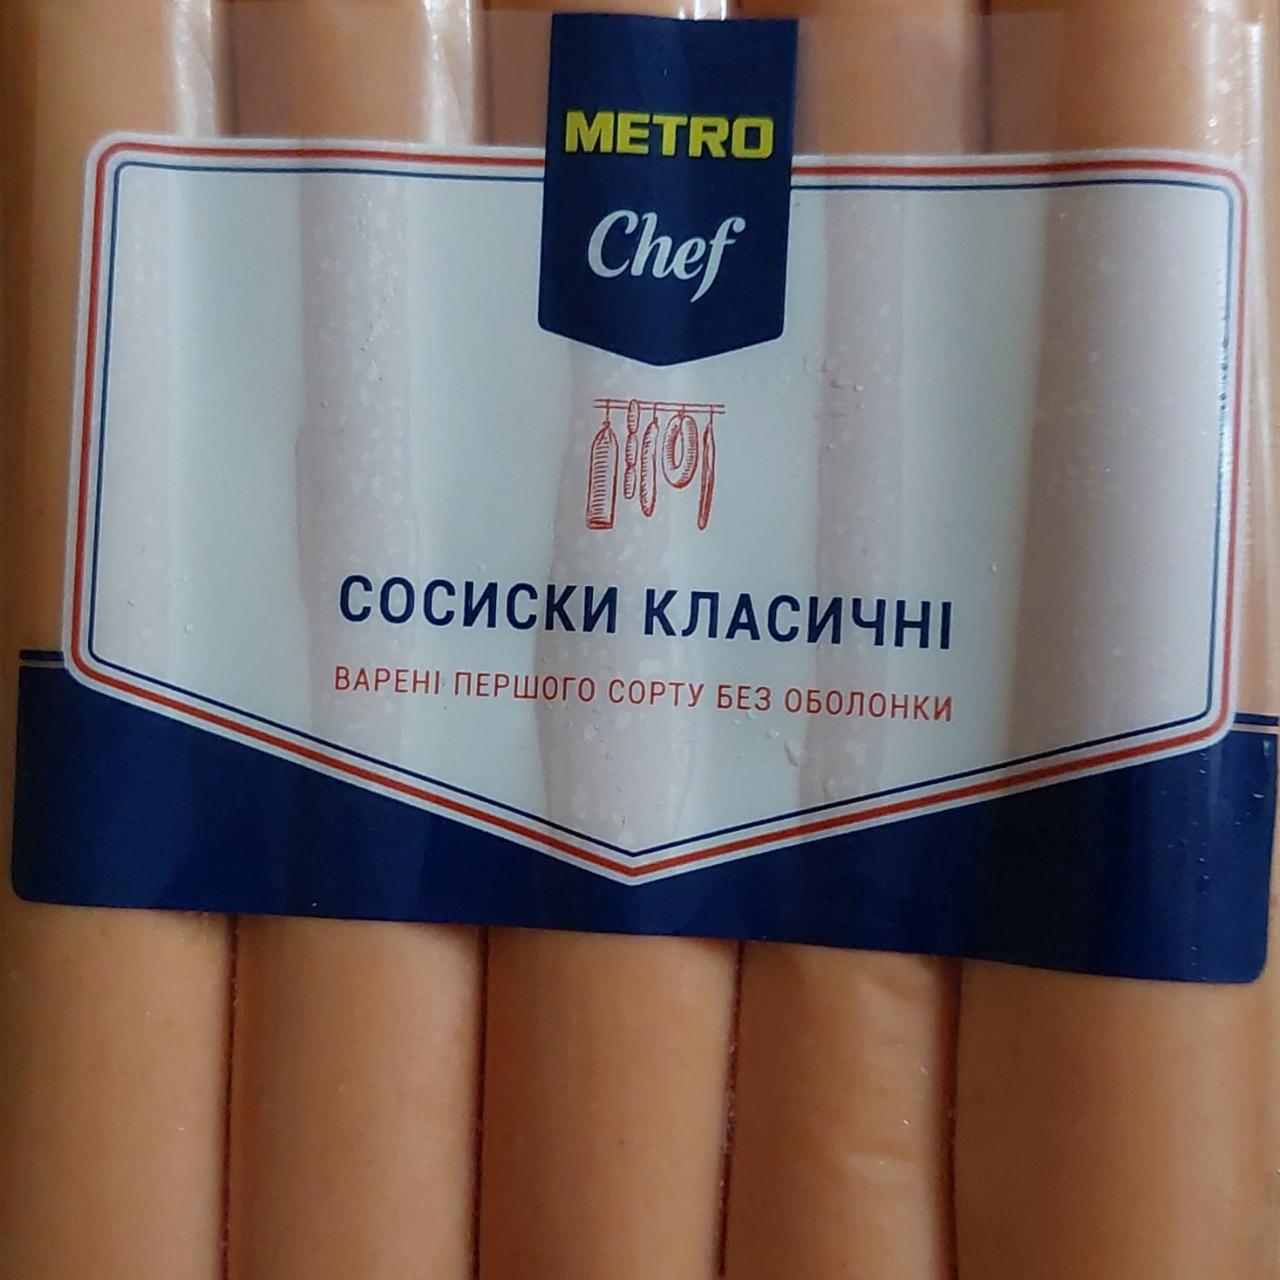 Фото - Сосиски класичні Metro Chef